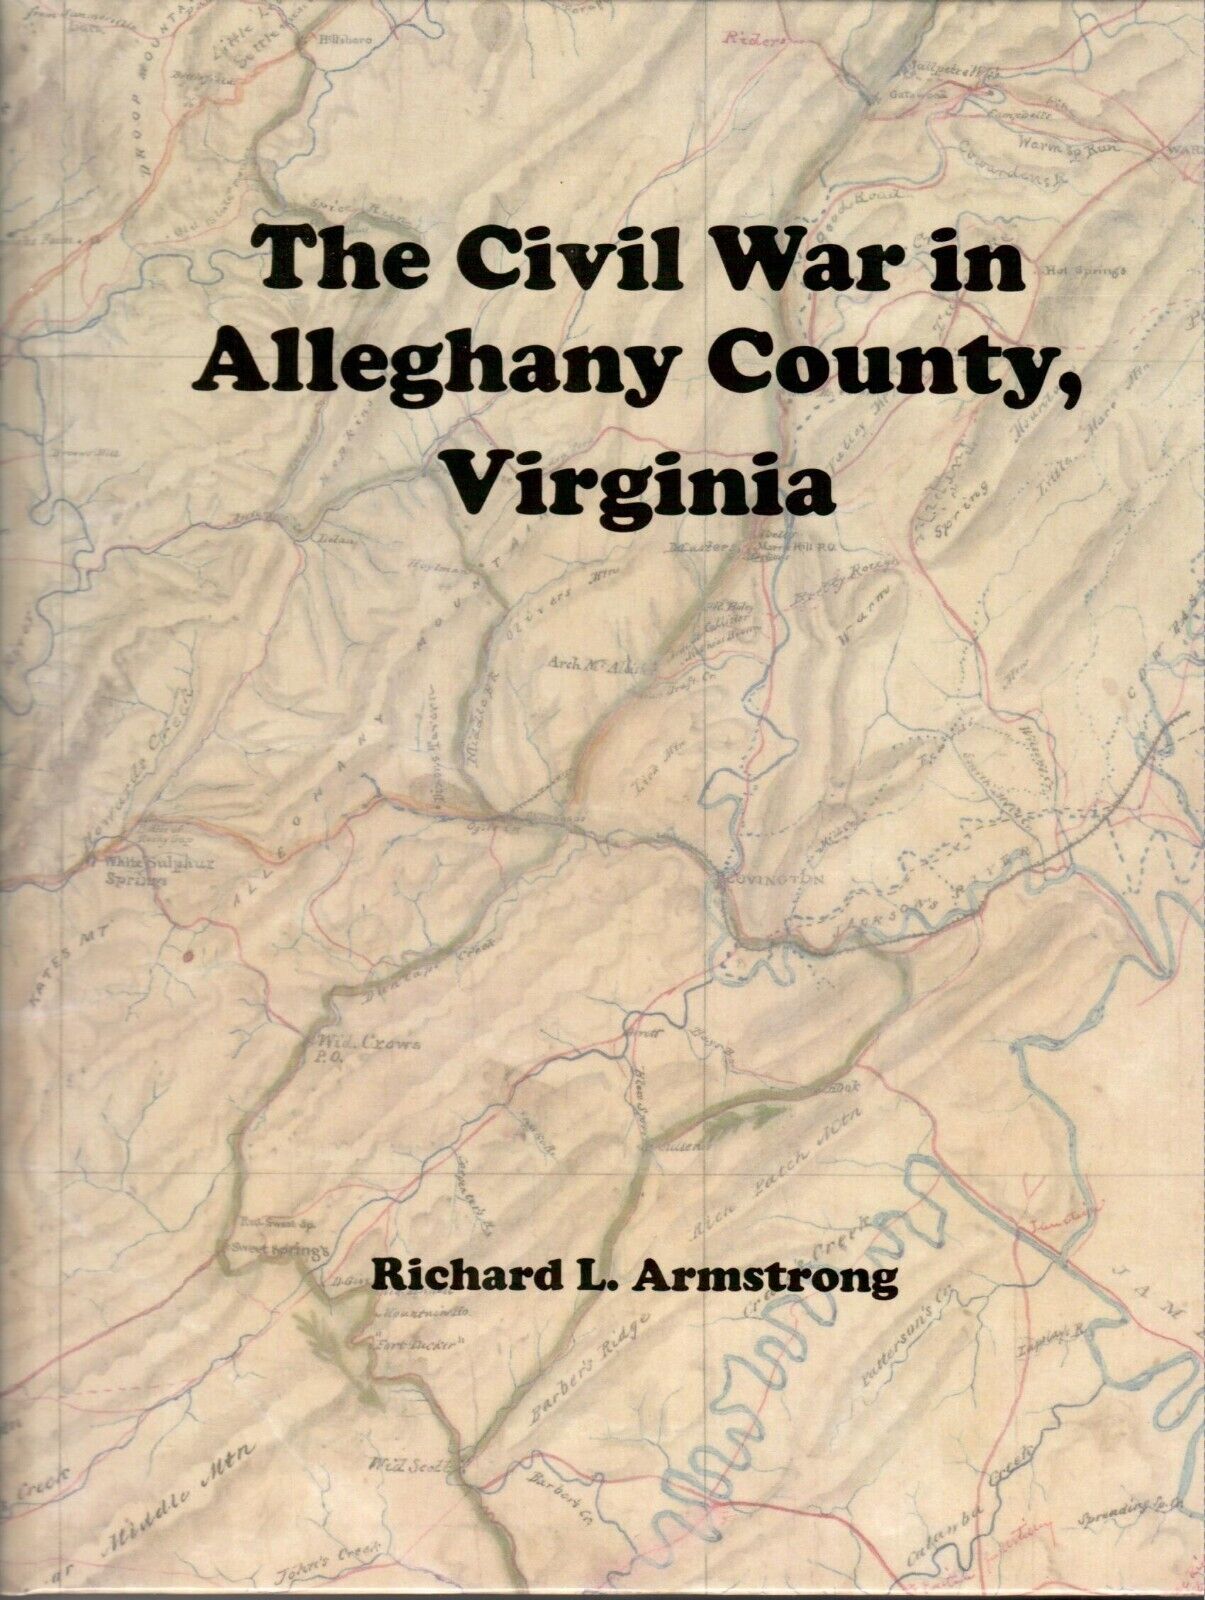 The Civil War in Alleghany County, Virginia